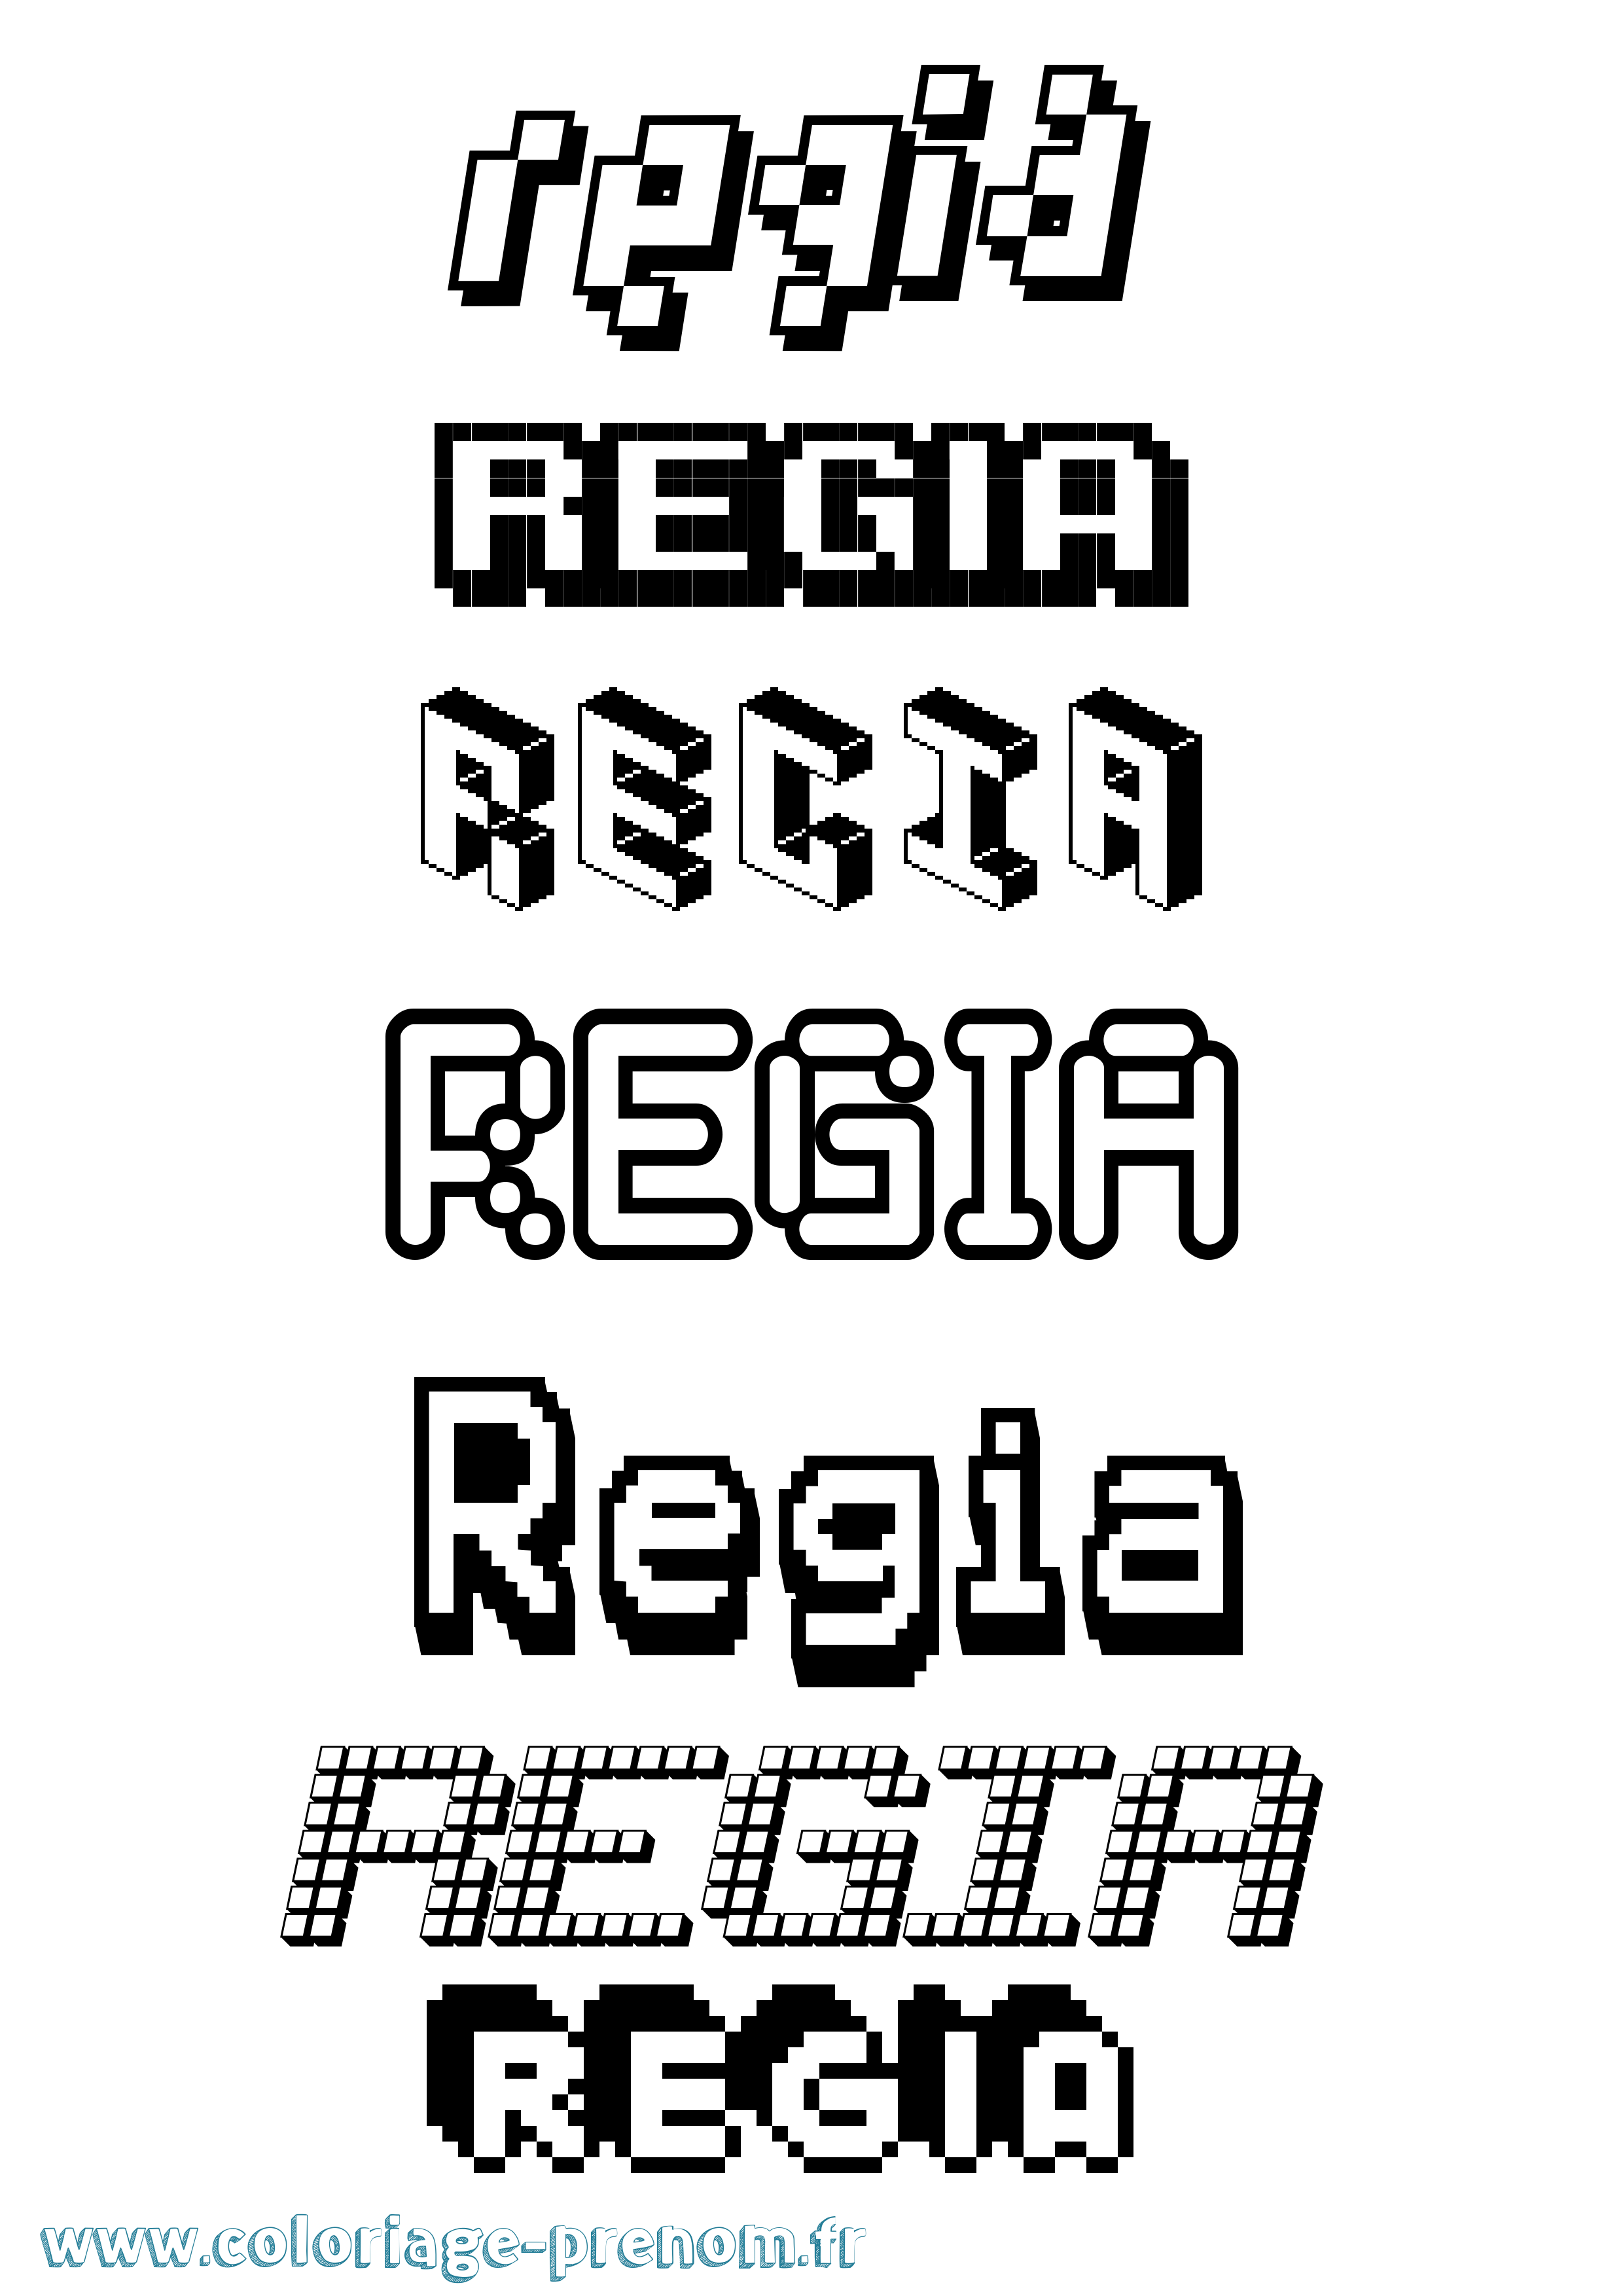 Coloriage prénom Regia Pixel